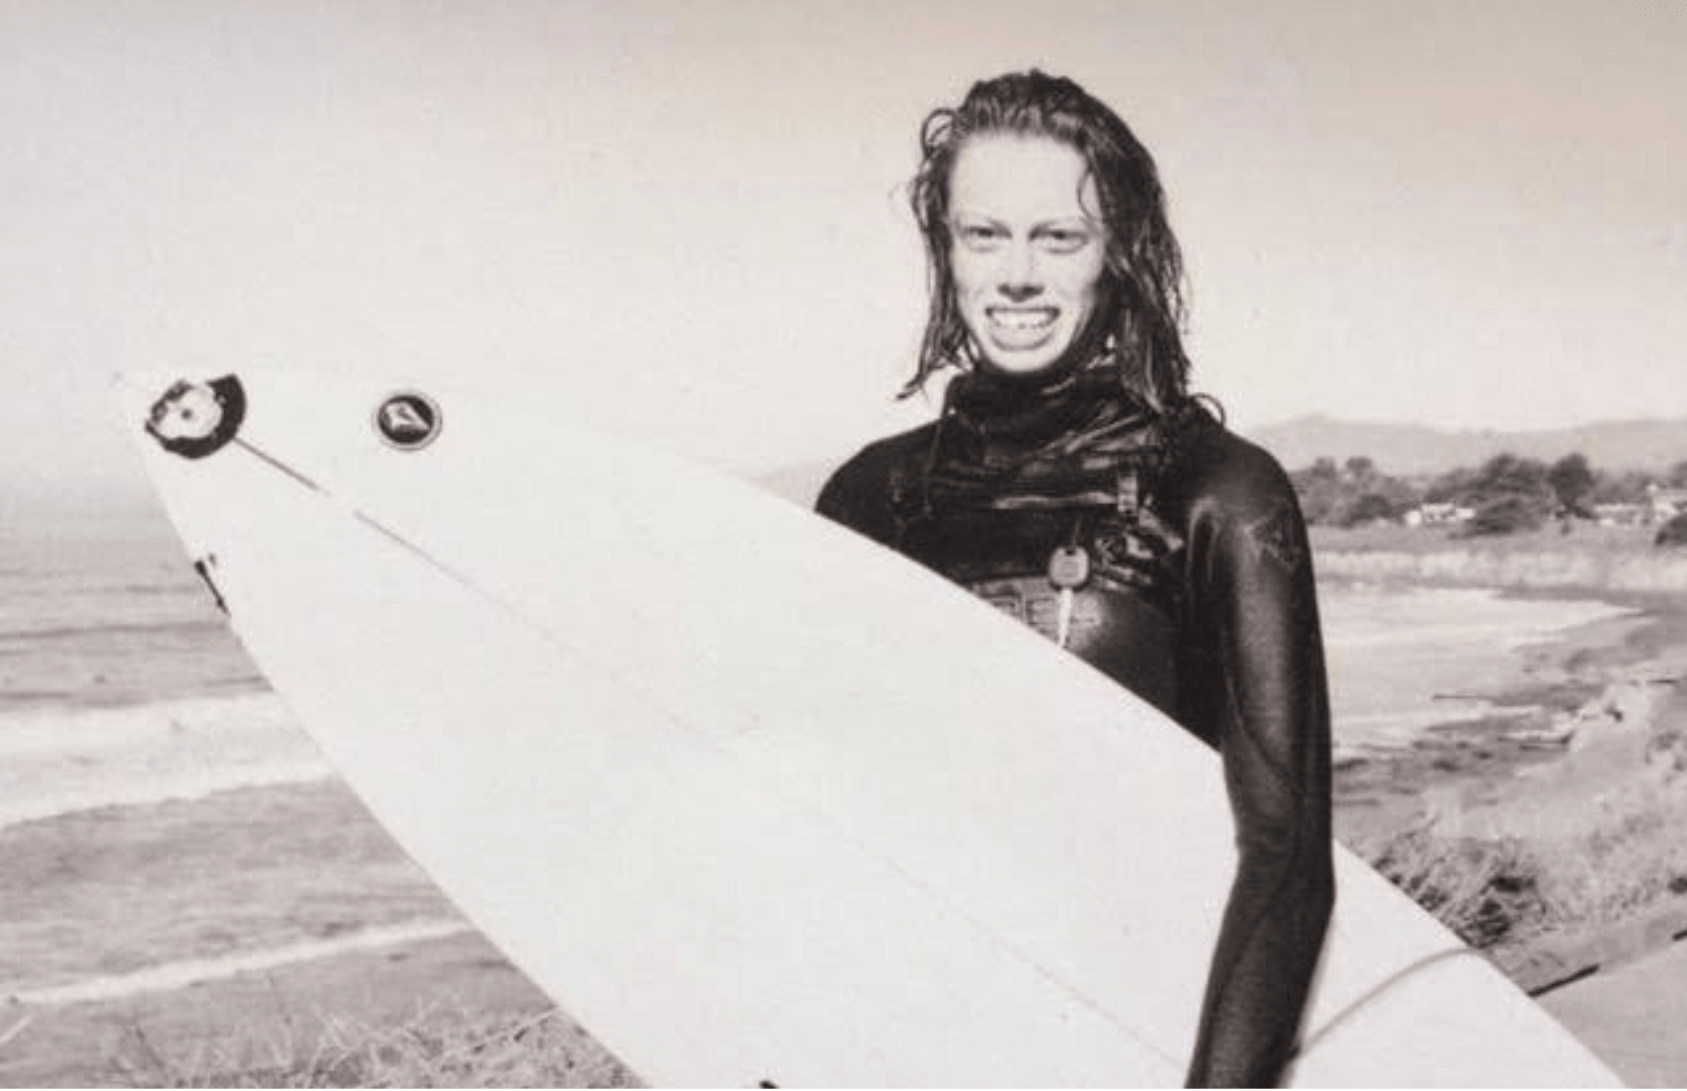 surfer, Liam Alexander Taylor, death, cambria, moonstone beach, surfing, skinny